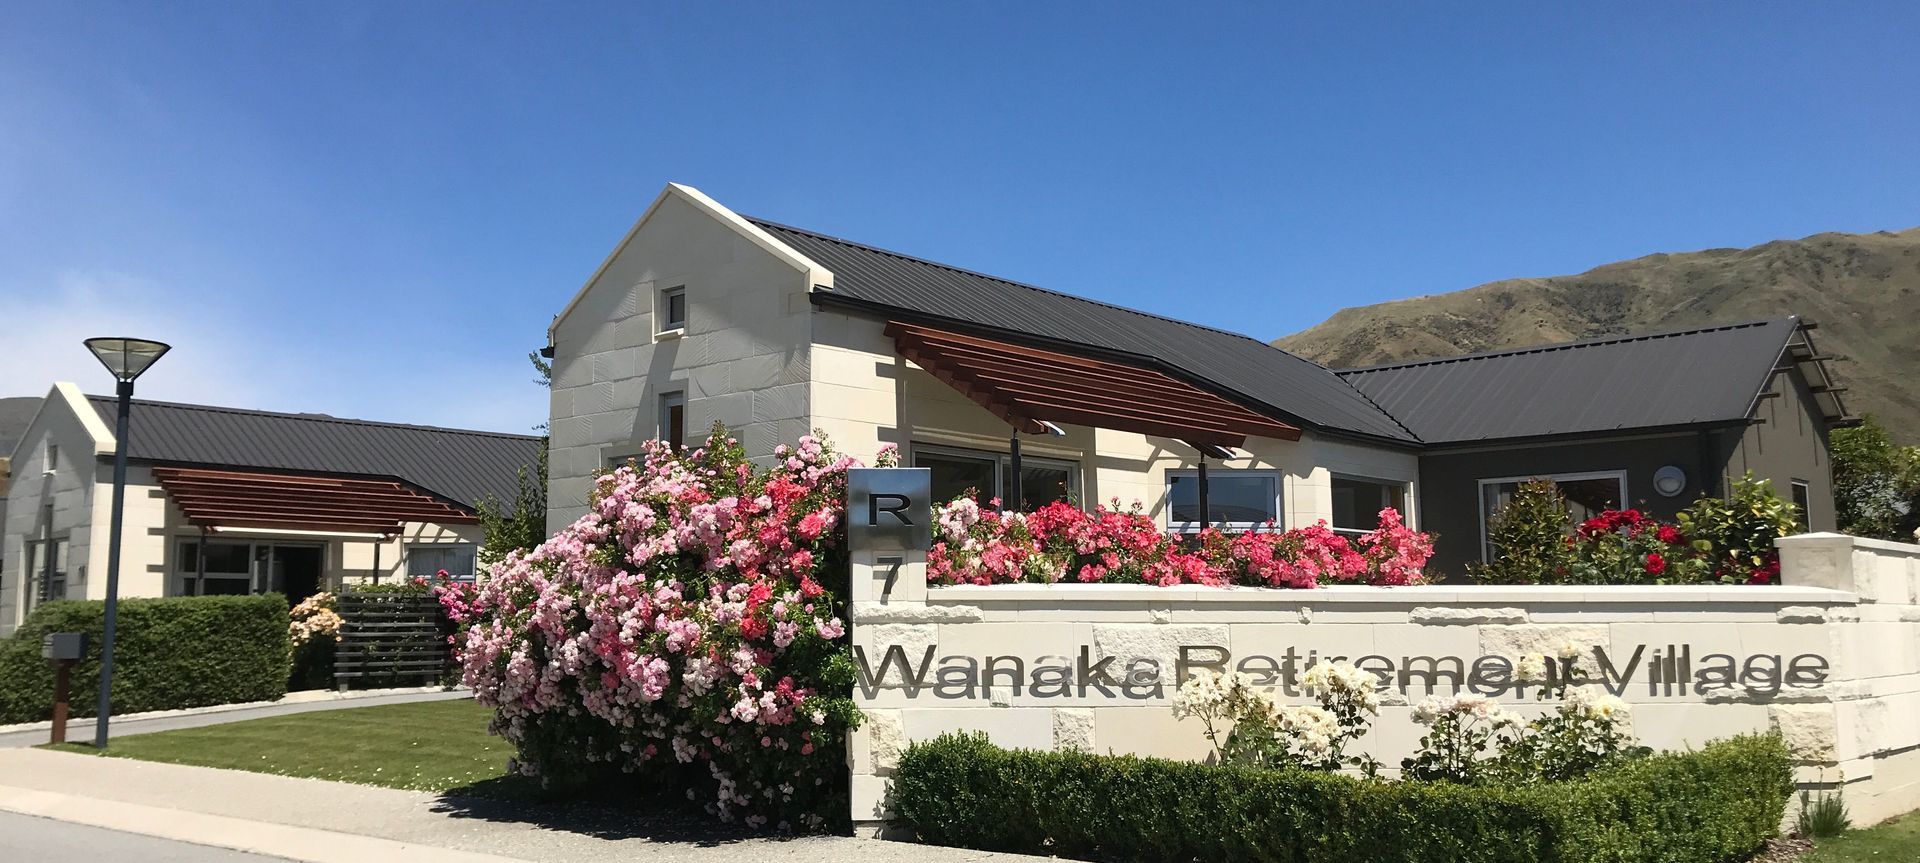 Wanaka Retirement Village banner